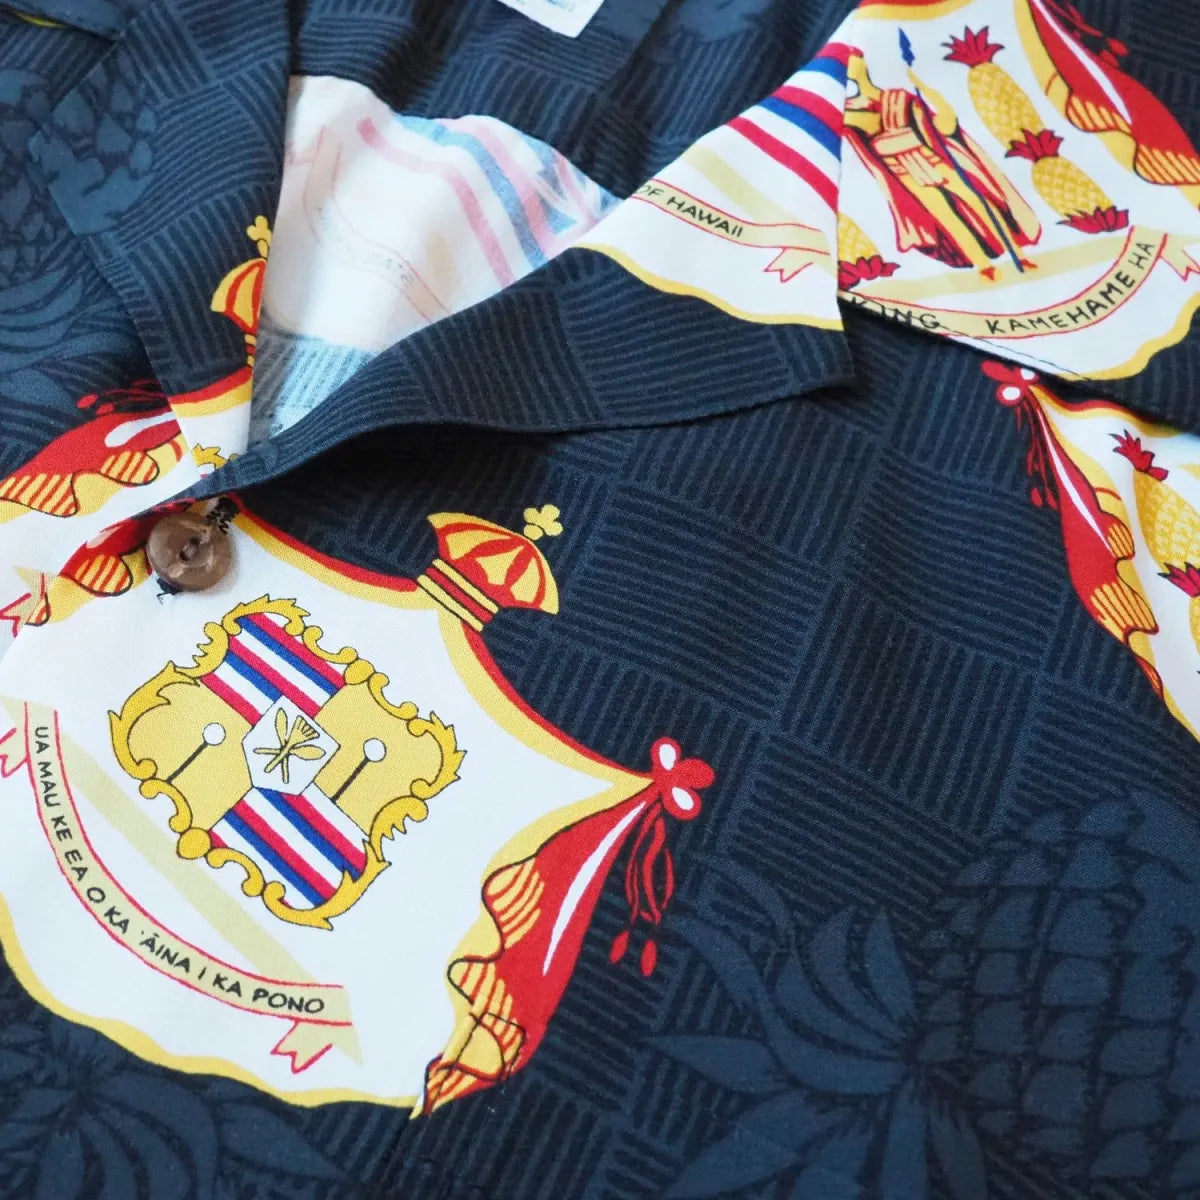 Crest black hawaiian aloha rayon shirt